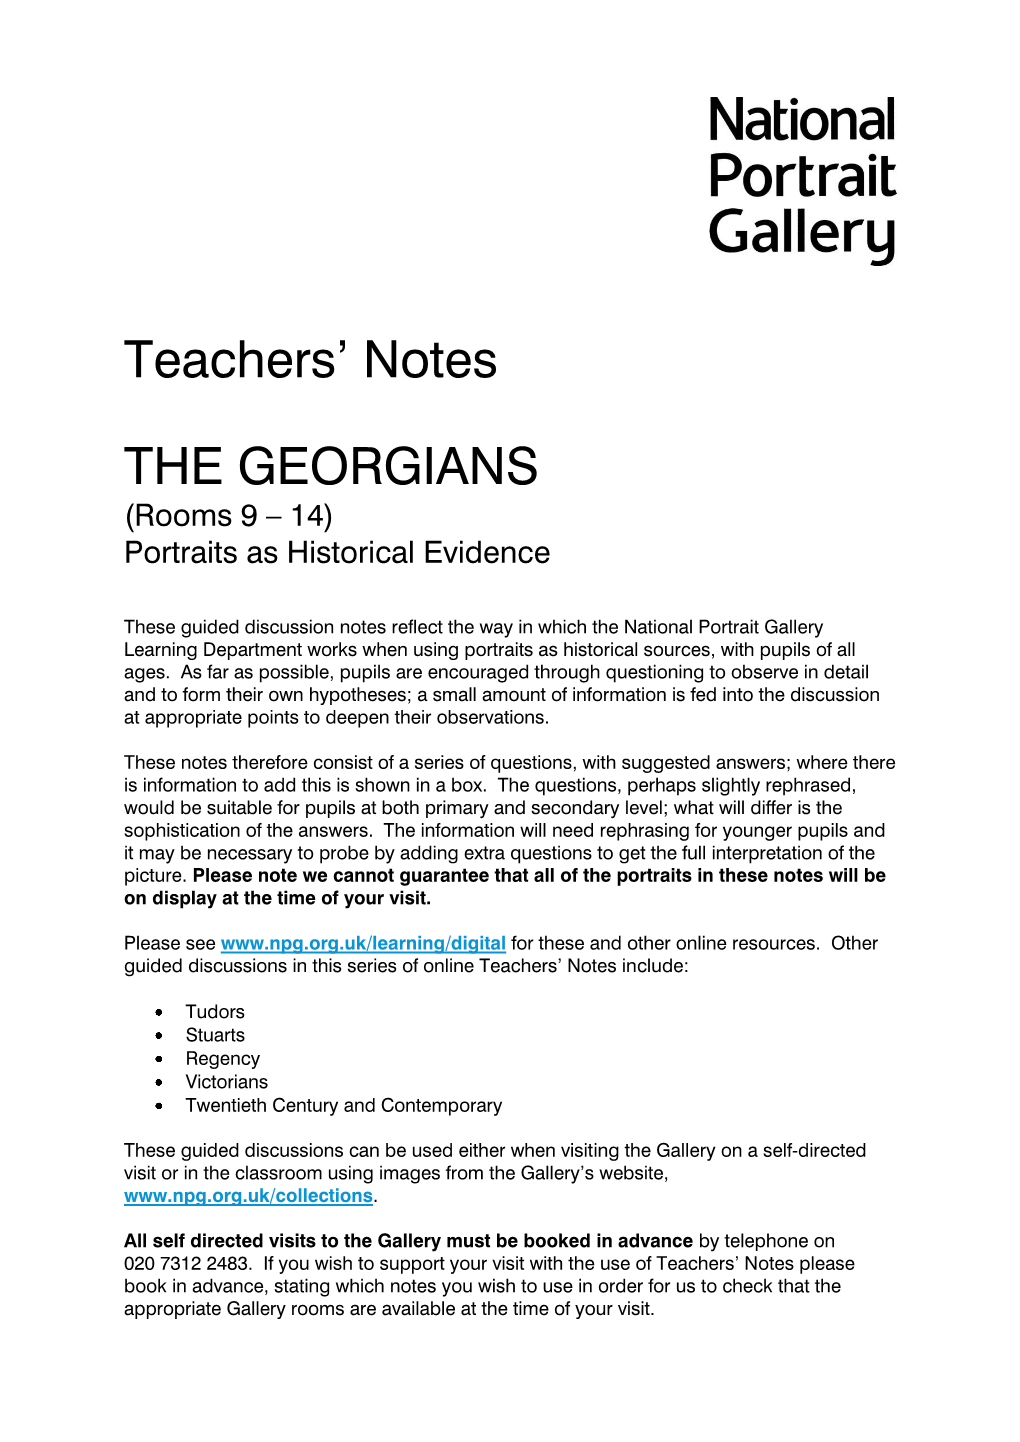 Teachers' Notes the GEORGIANS